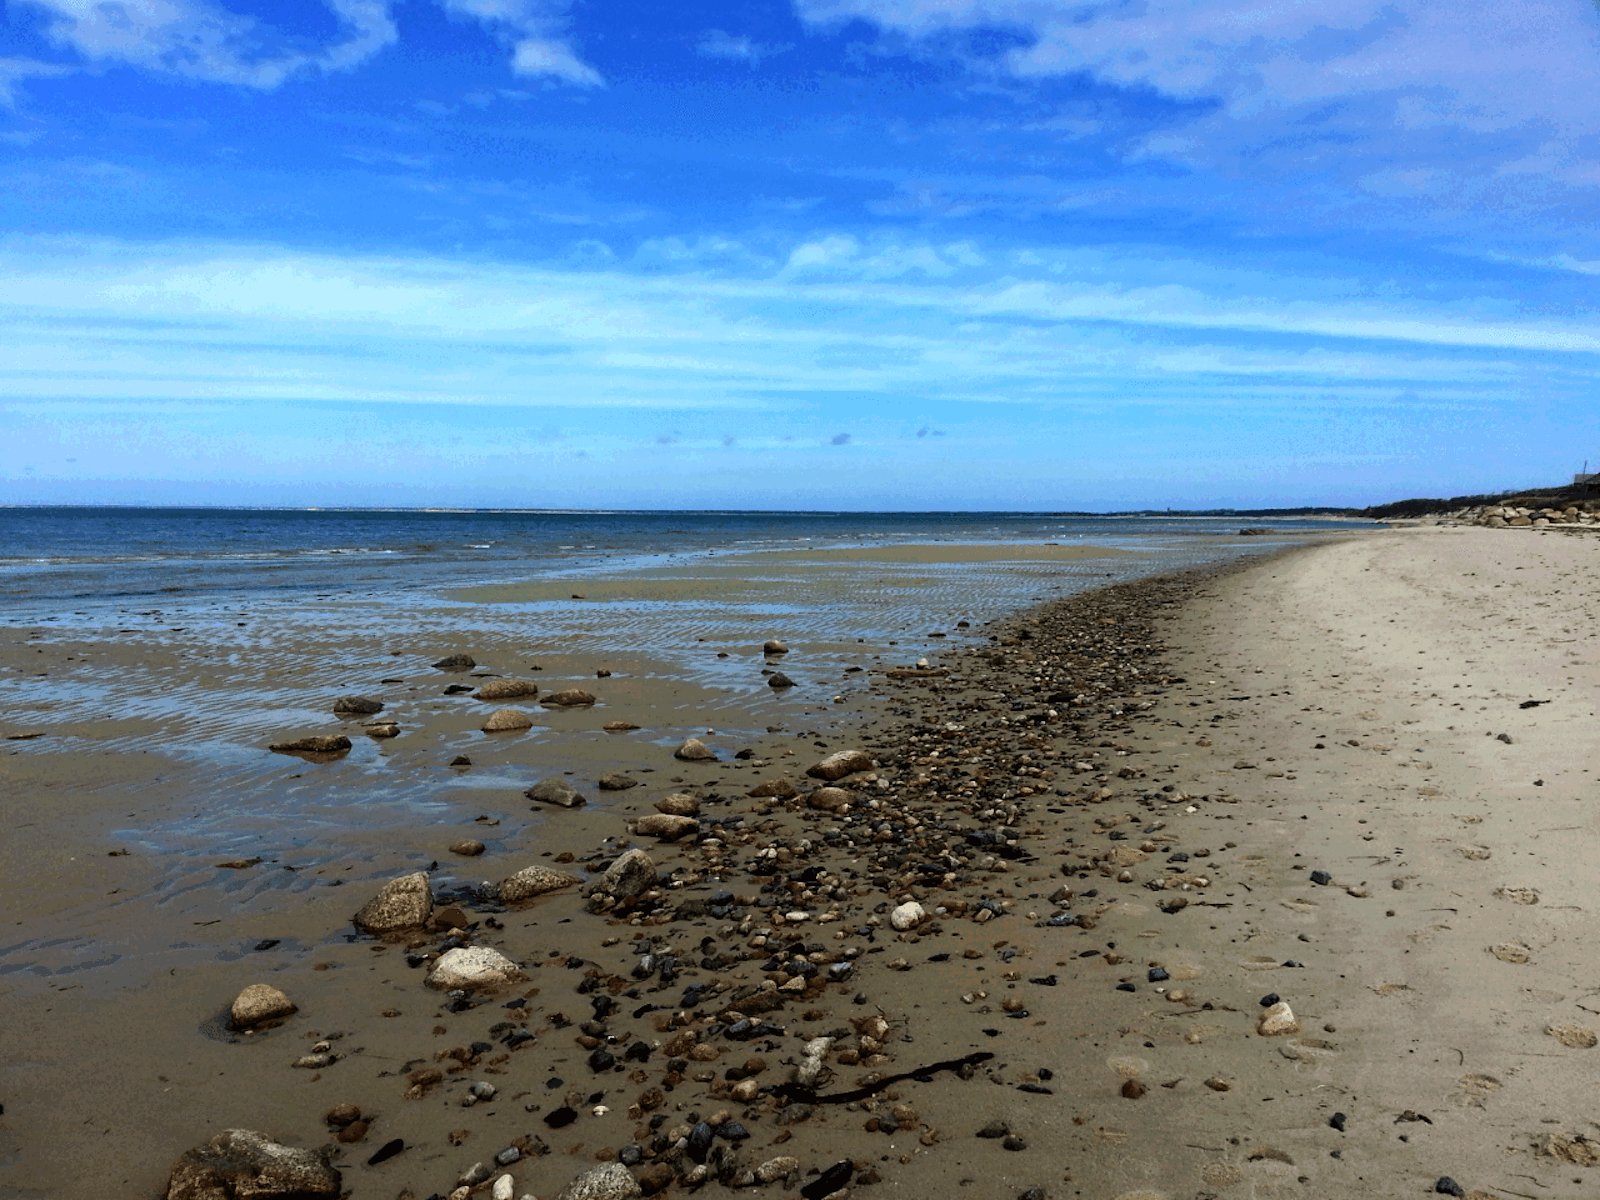 Cape cod beach with rocks.